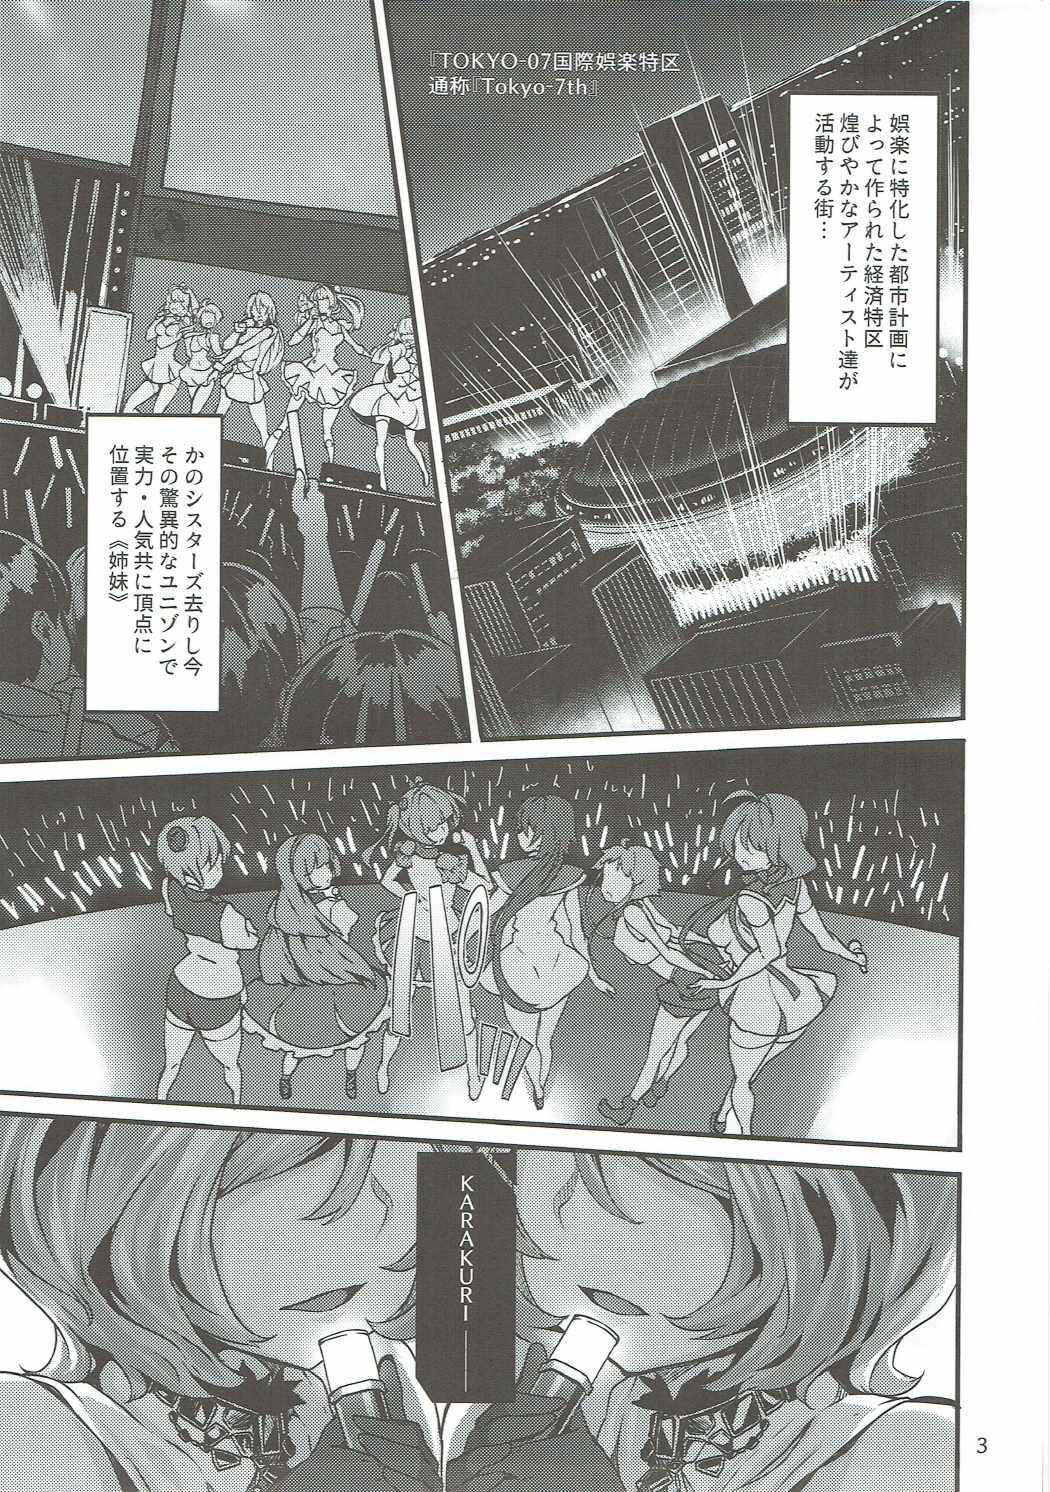 Cavalgando Twin x Sense - Tokyo 7th sisters Mallu - Page 2